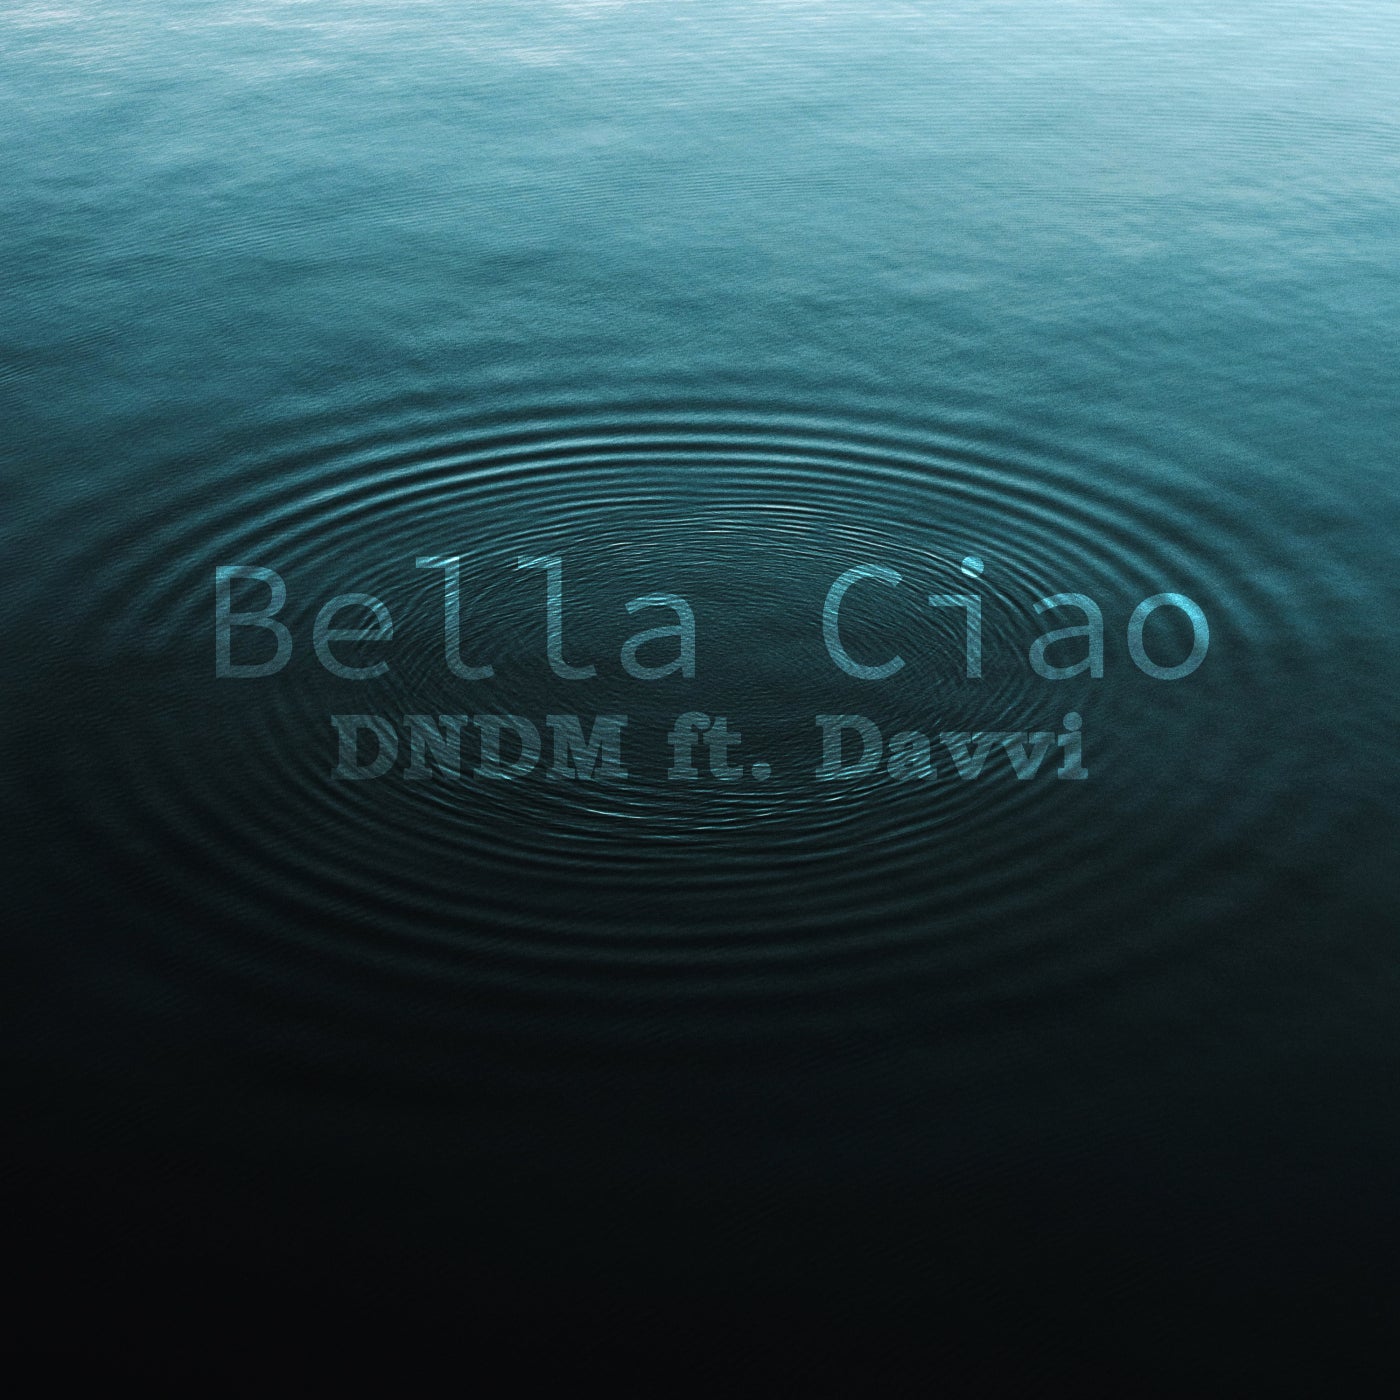 Bella ciao original